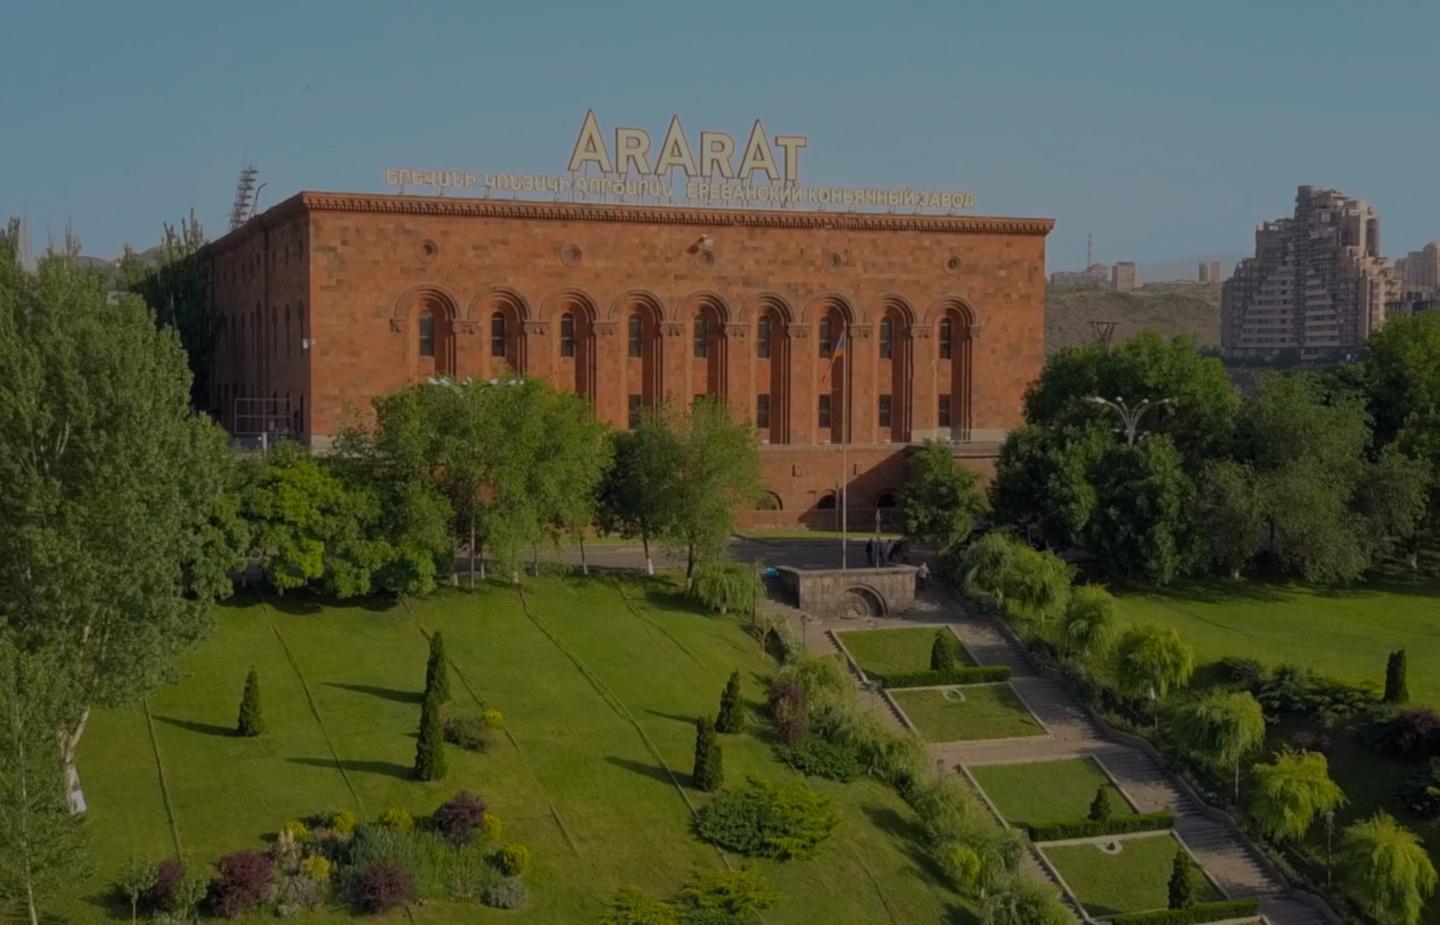 Ararat Brandy Company